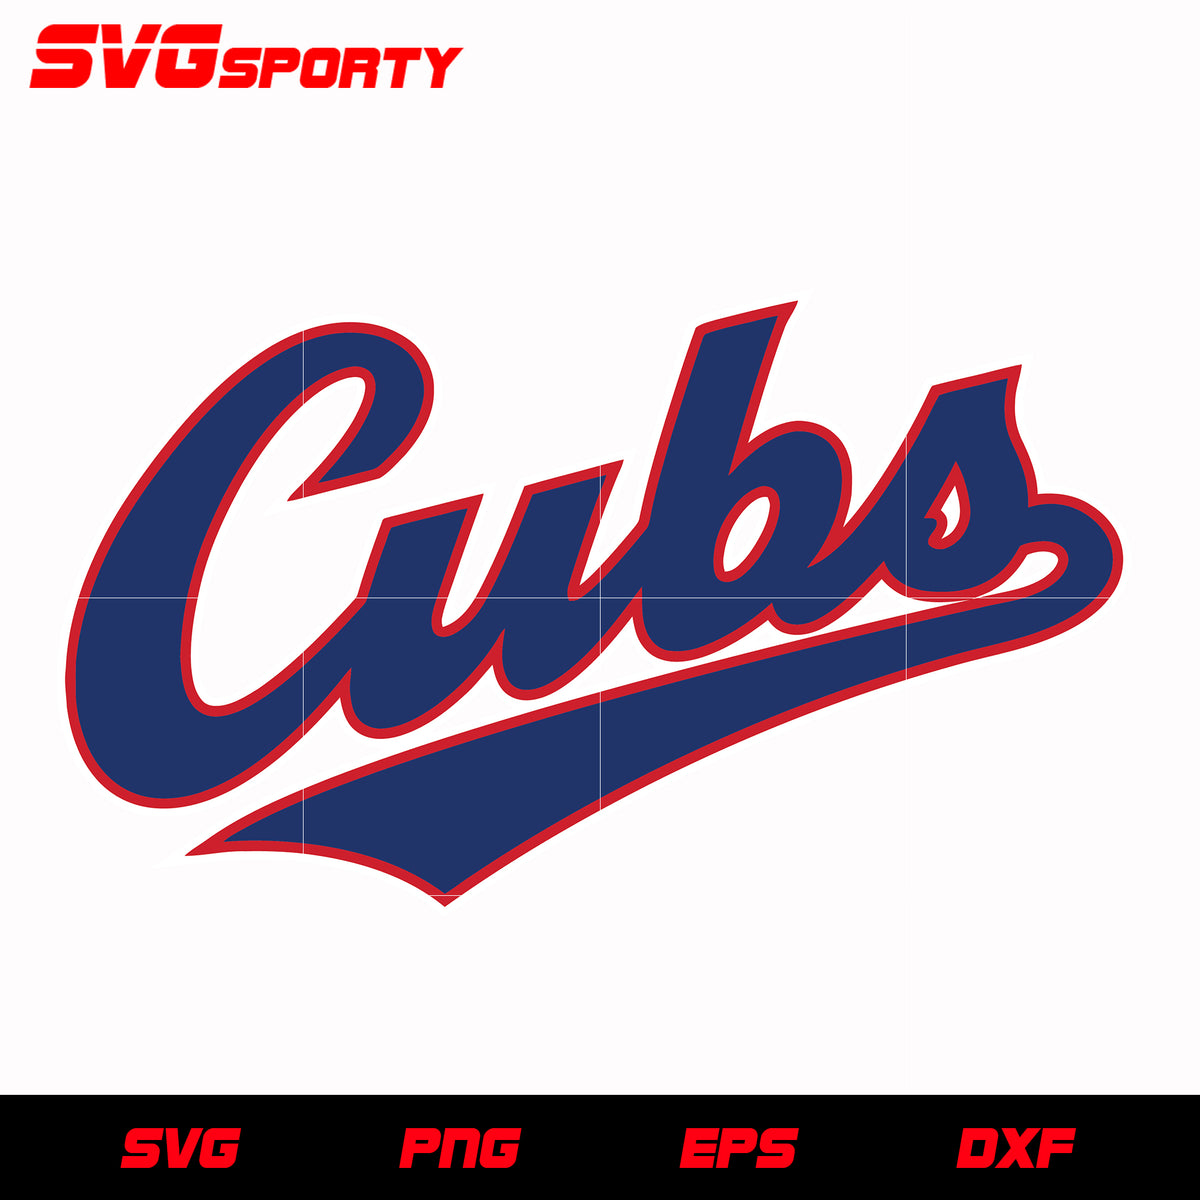 The Chicago Cubs Baseball cut file for cricut silhouette machine